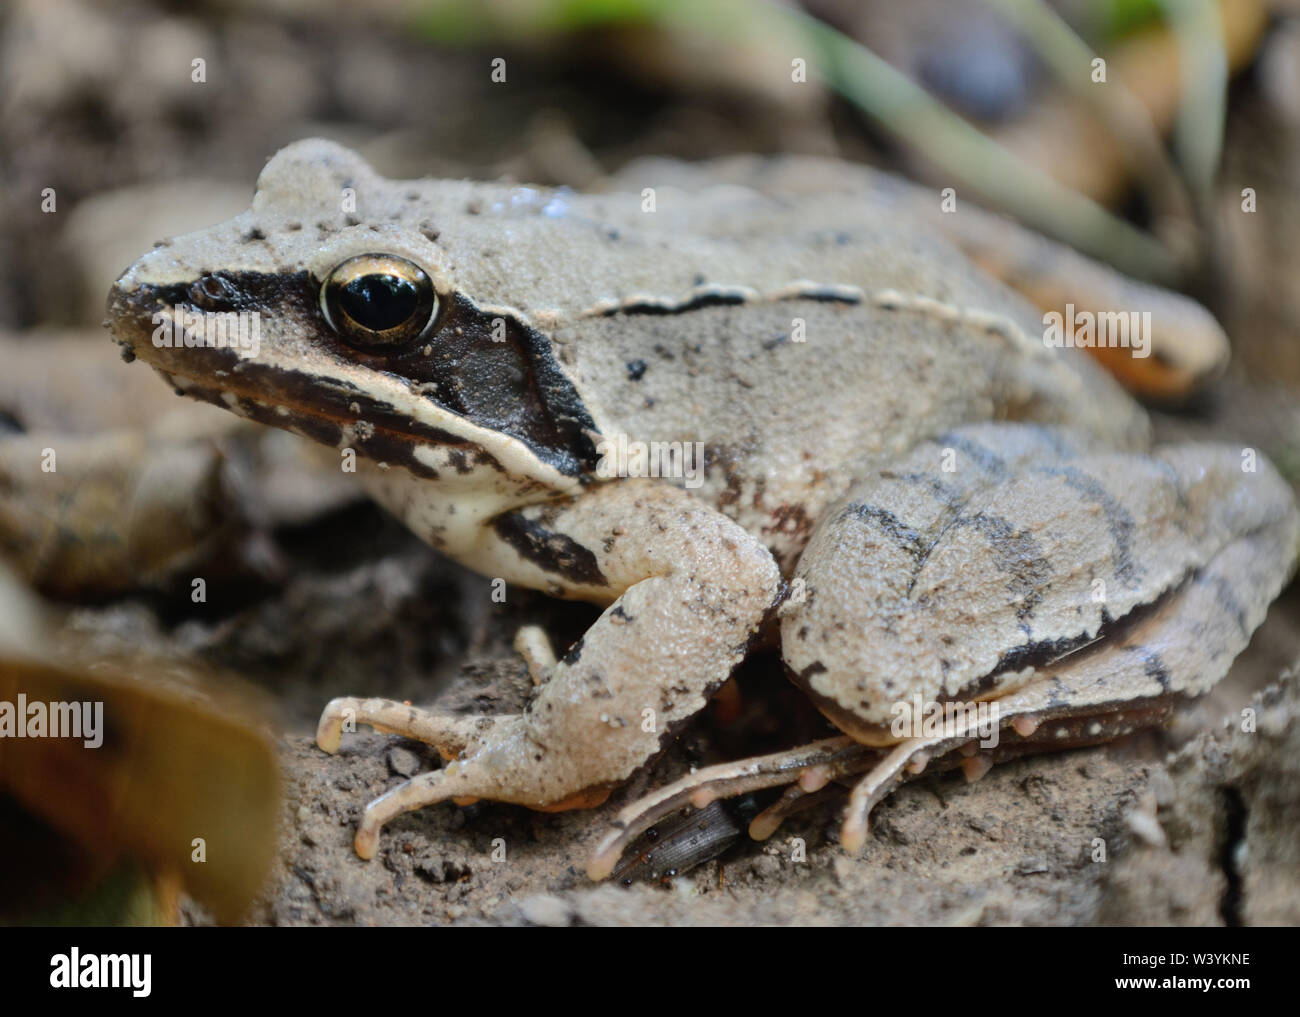 Nahaufnahme von frog Rana temporaria im Garten, Makro Fotografie Stockfoto